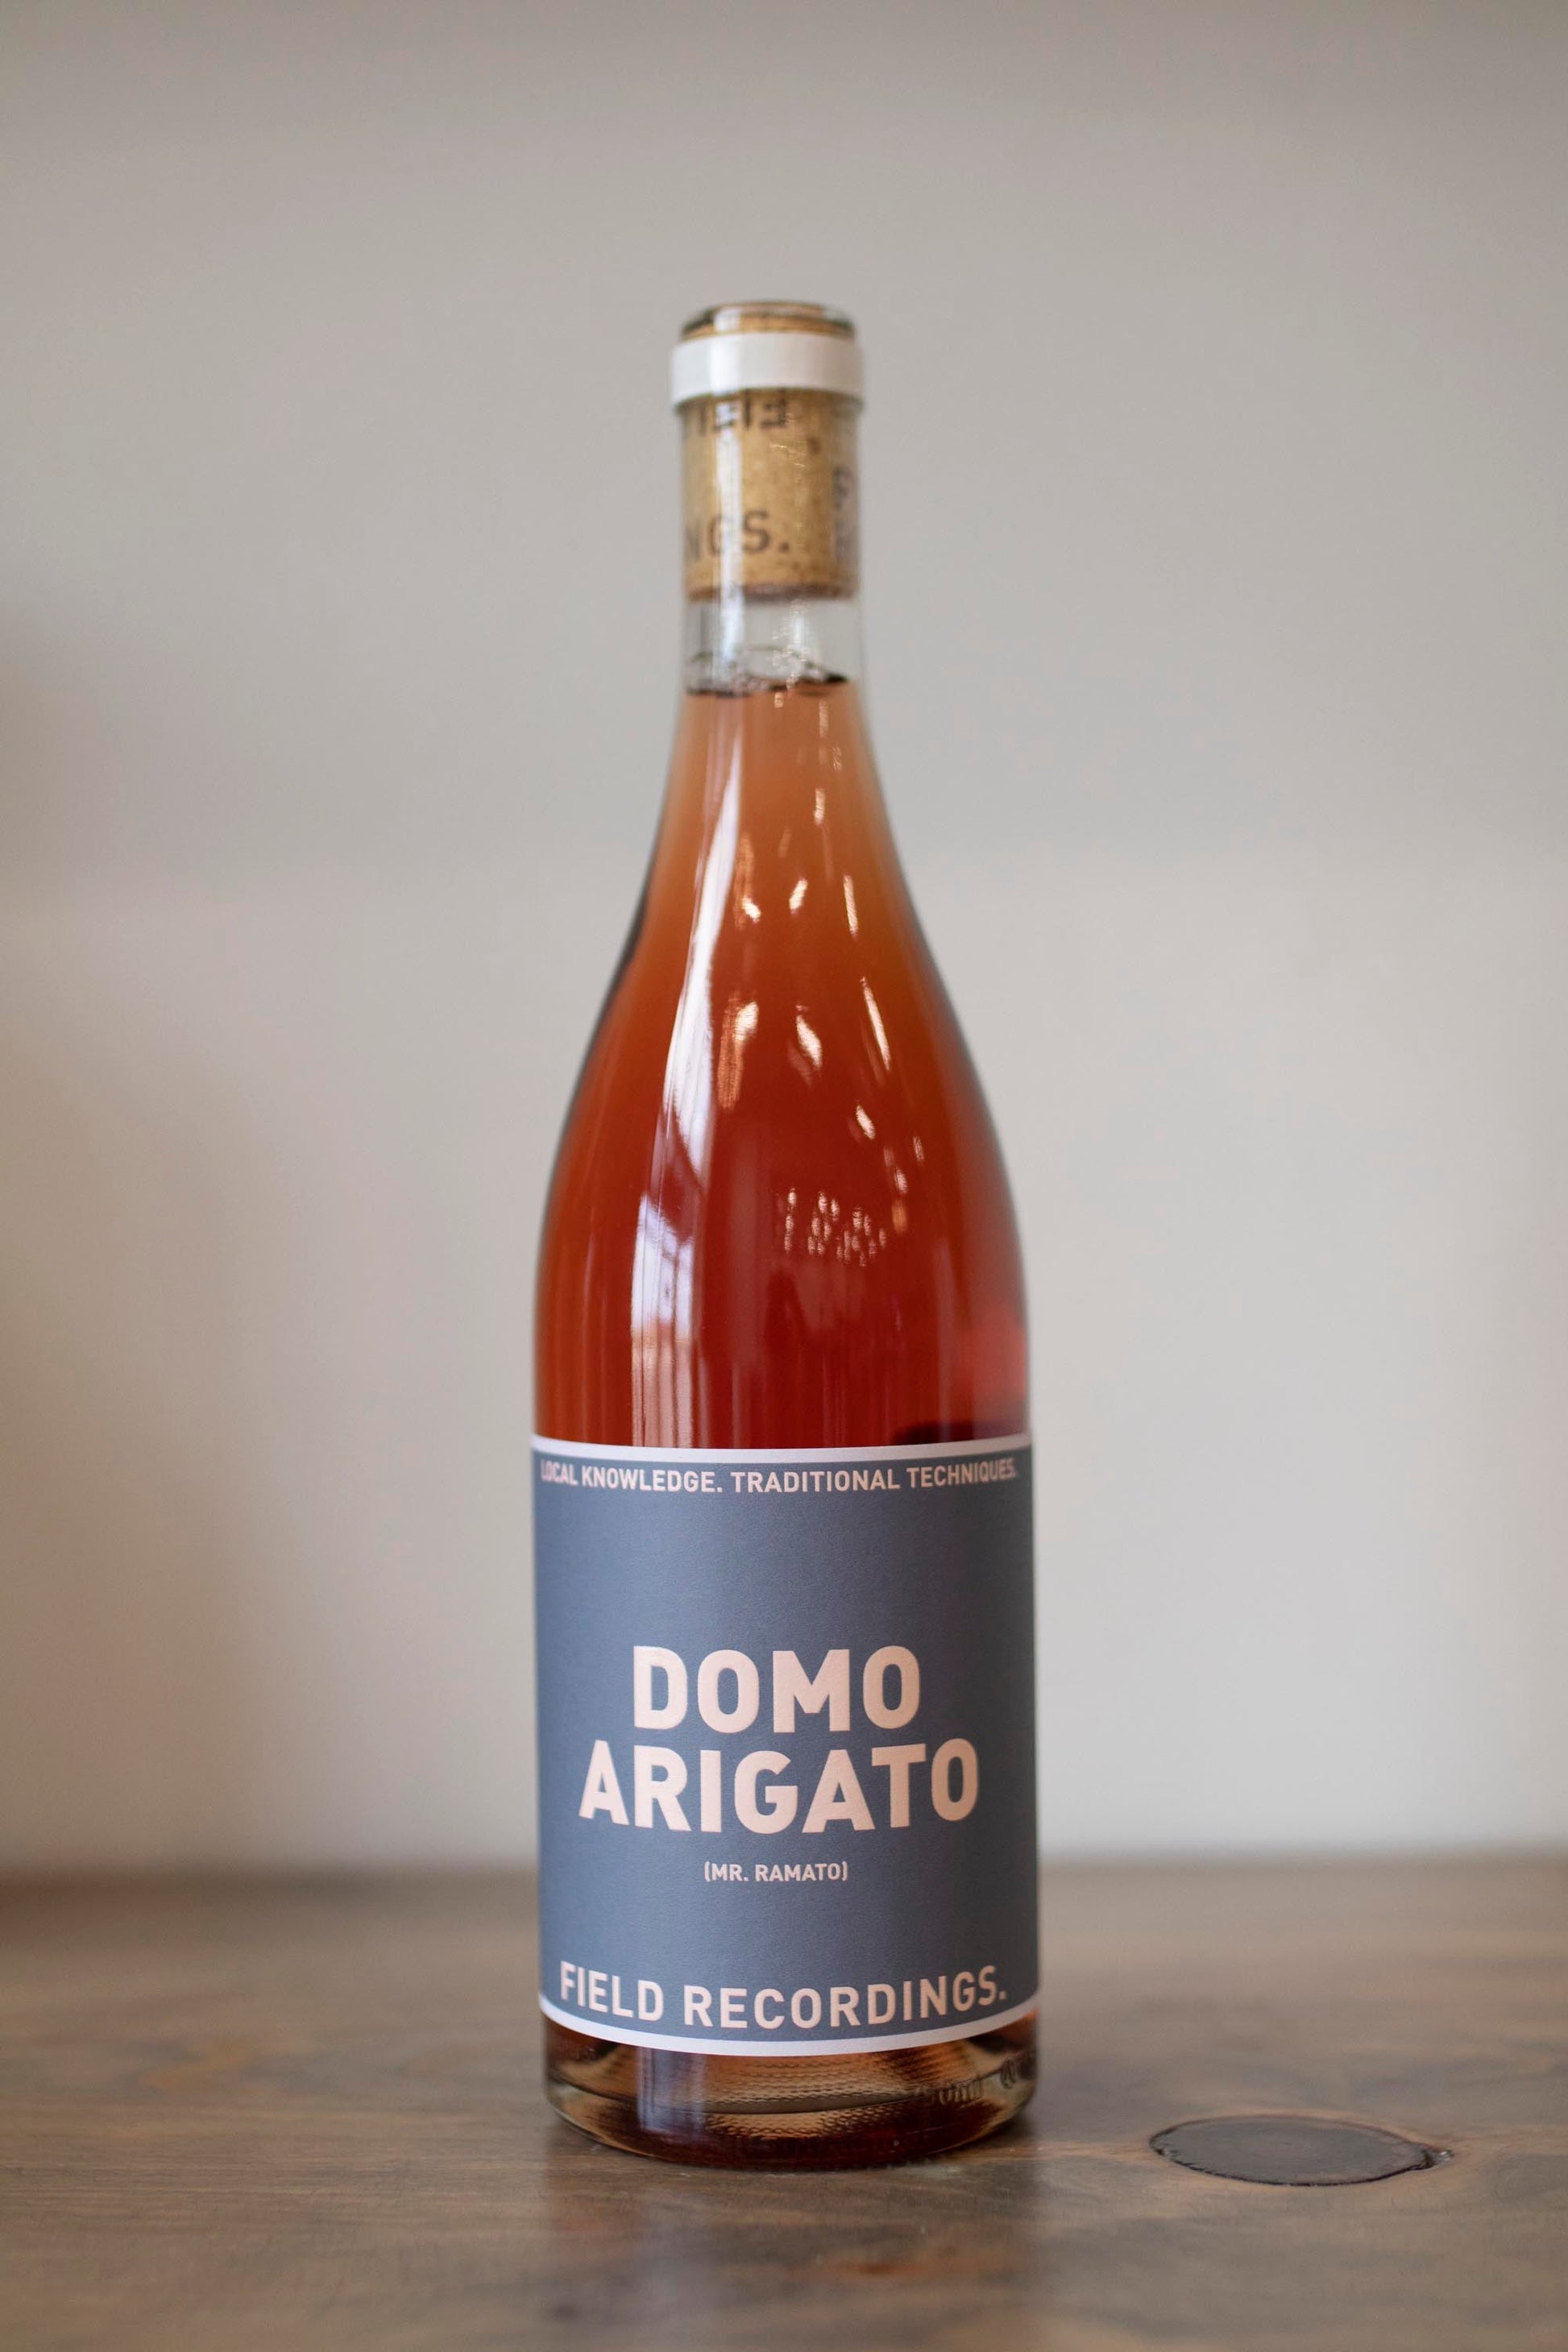 Bottle of Field Recordings Domo Arigato Mr. Ramato Pinot Grigio found at Vine & Board in 3809 NW 166th St Suite 1, Edmond, OK 73012